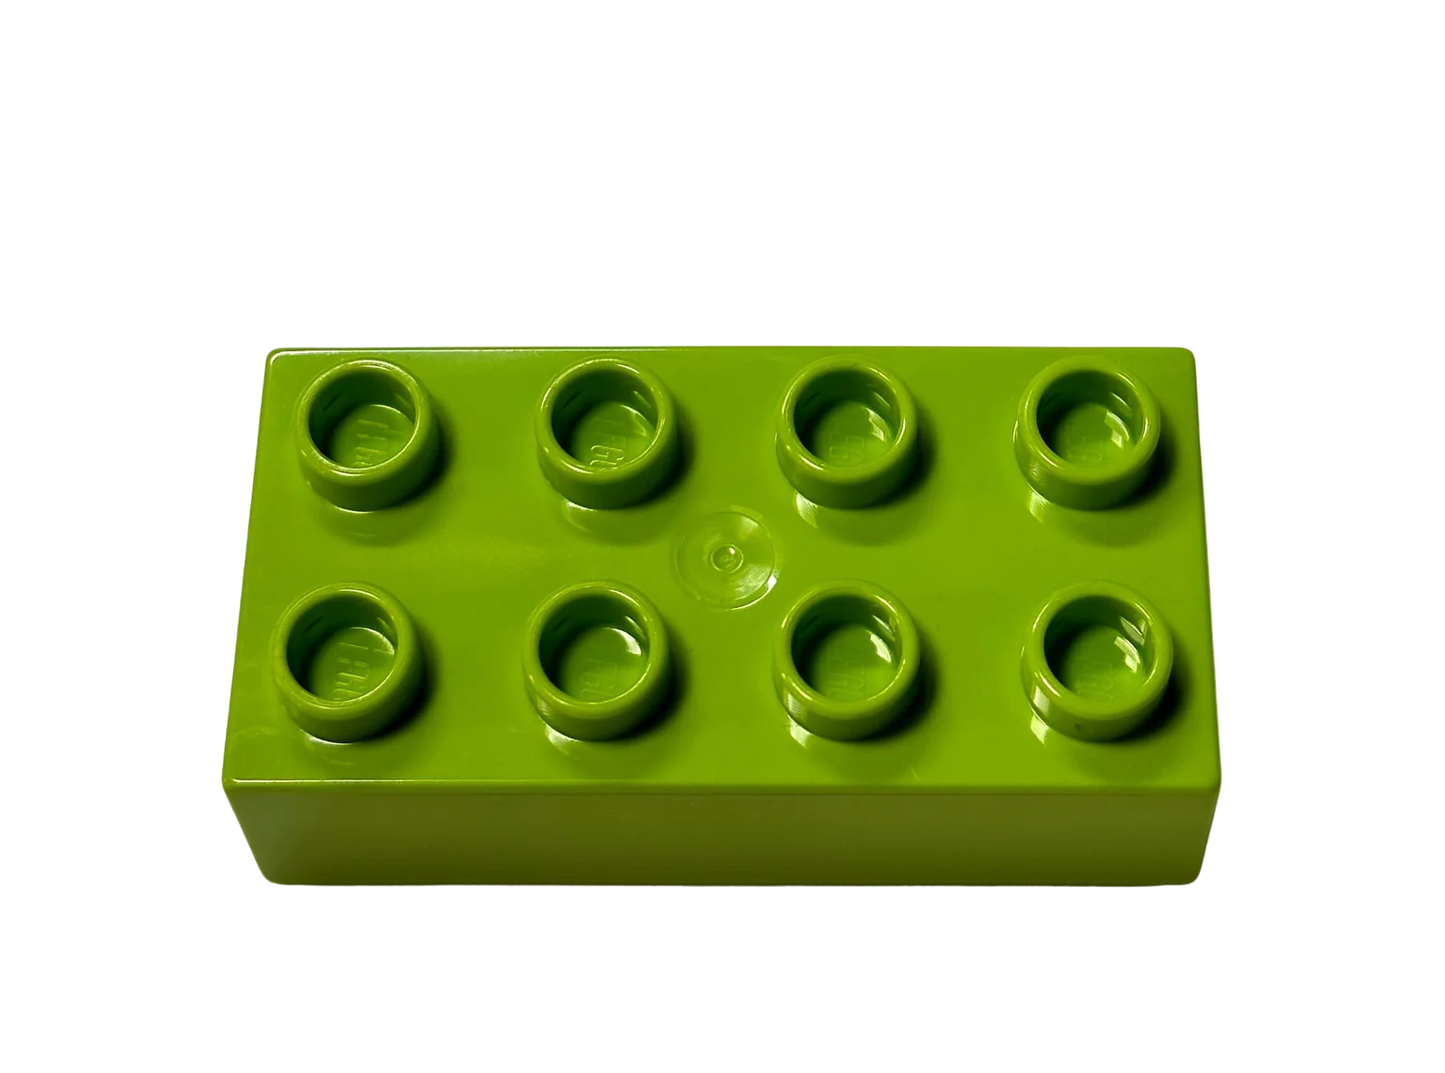 Cópia de LEGO PART 3011 Duplo Brick 2 x 4 (LIME) - USADO